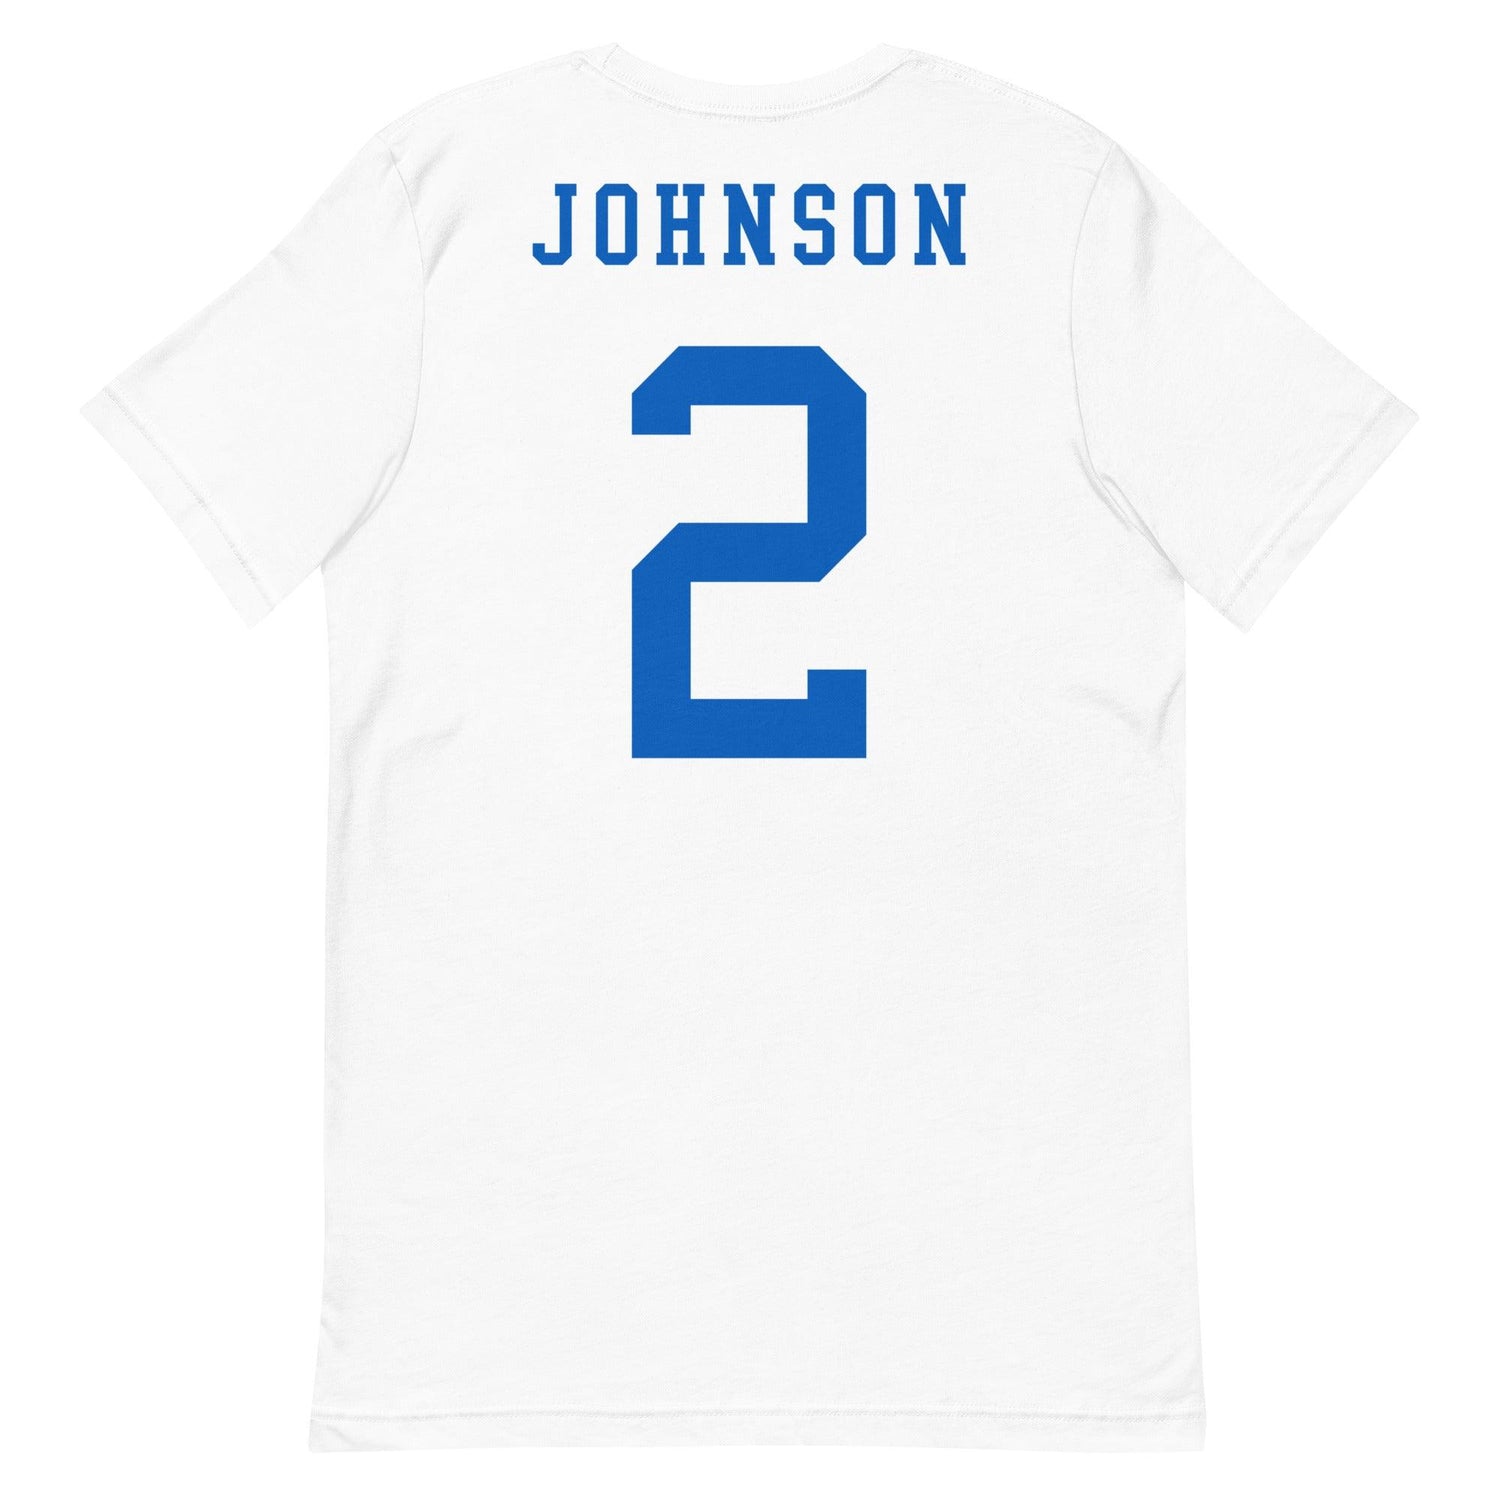 Antwain Johnson "Jersey" t-shirt - Fan Arch